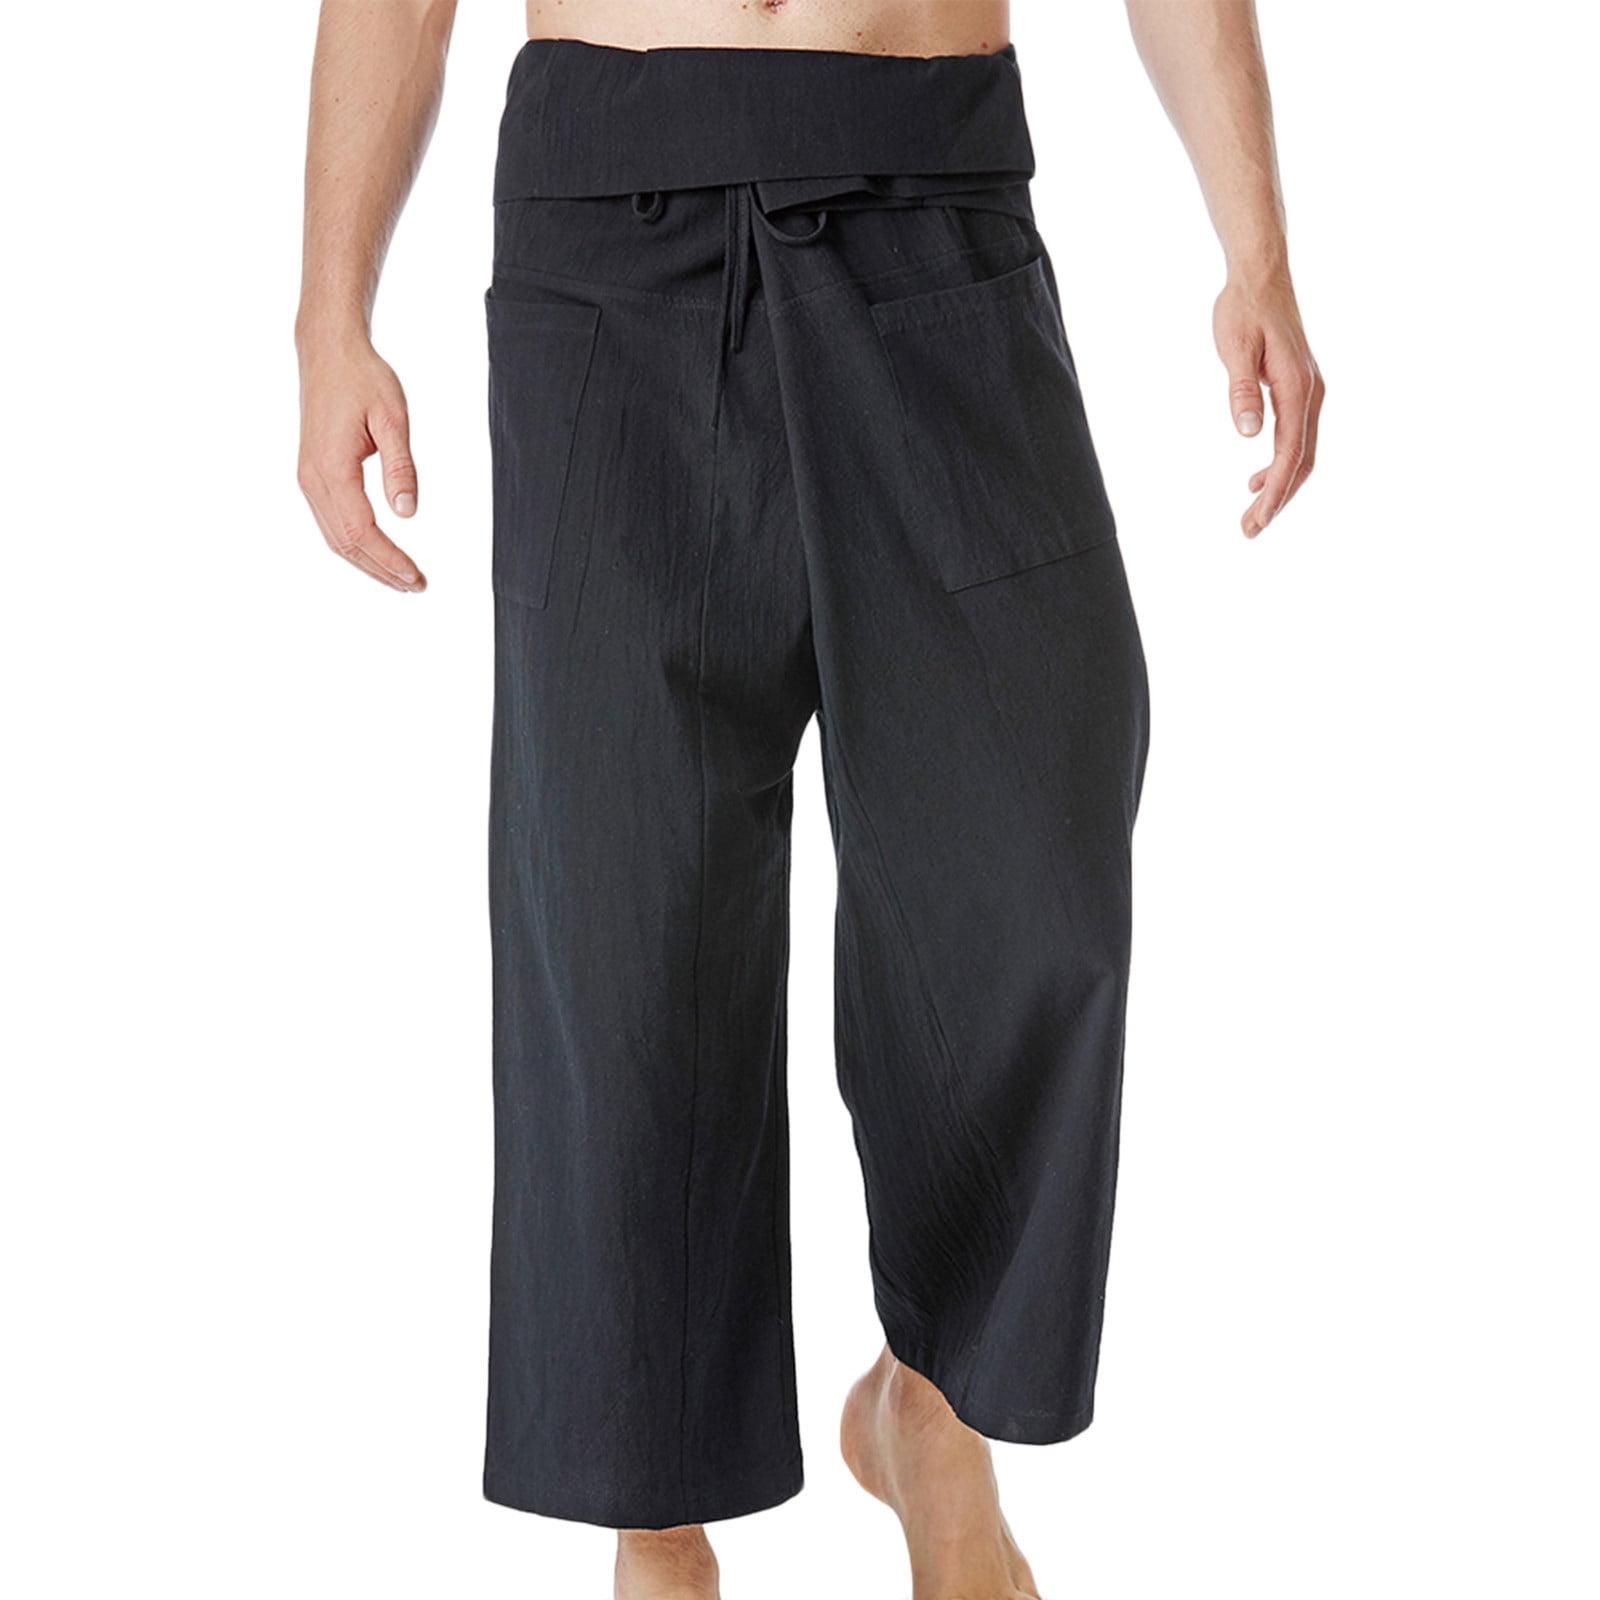 Tuphregyow Men's Thai Fisherman Pants Solid Perfect for Yoga, Martial Arts,  Pirate, Medieval, Japanese Pantalones Cotton Widde Leg Loose Pants  Drawstring Pants with Pockets Coffee Free Size 